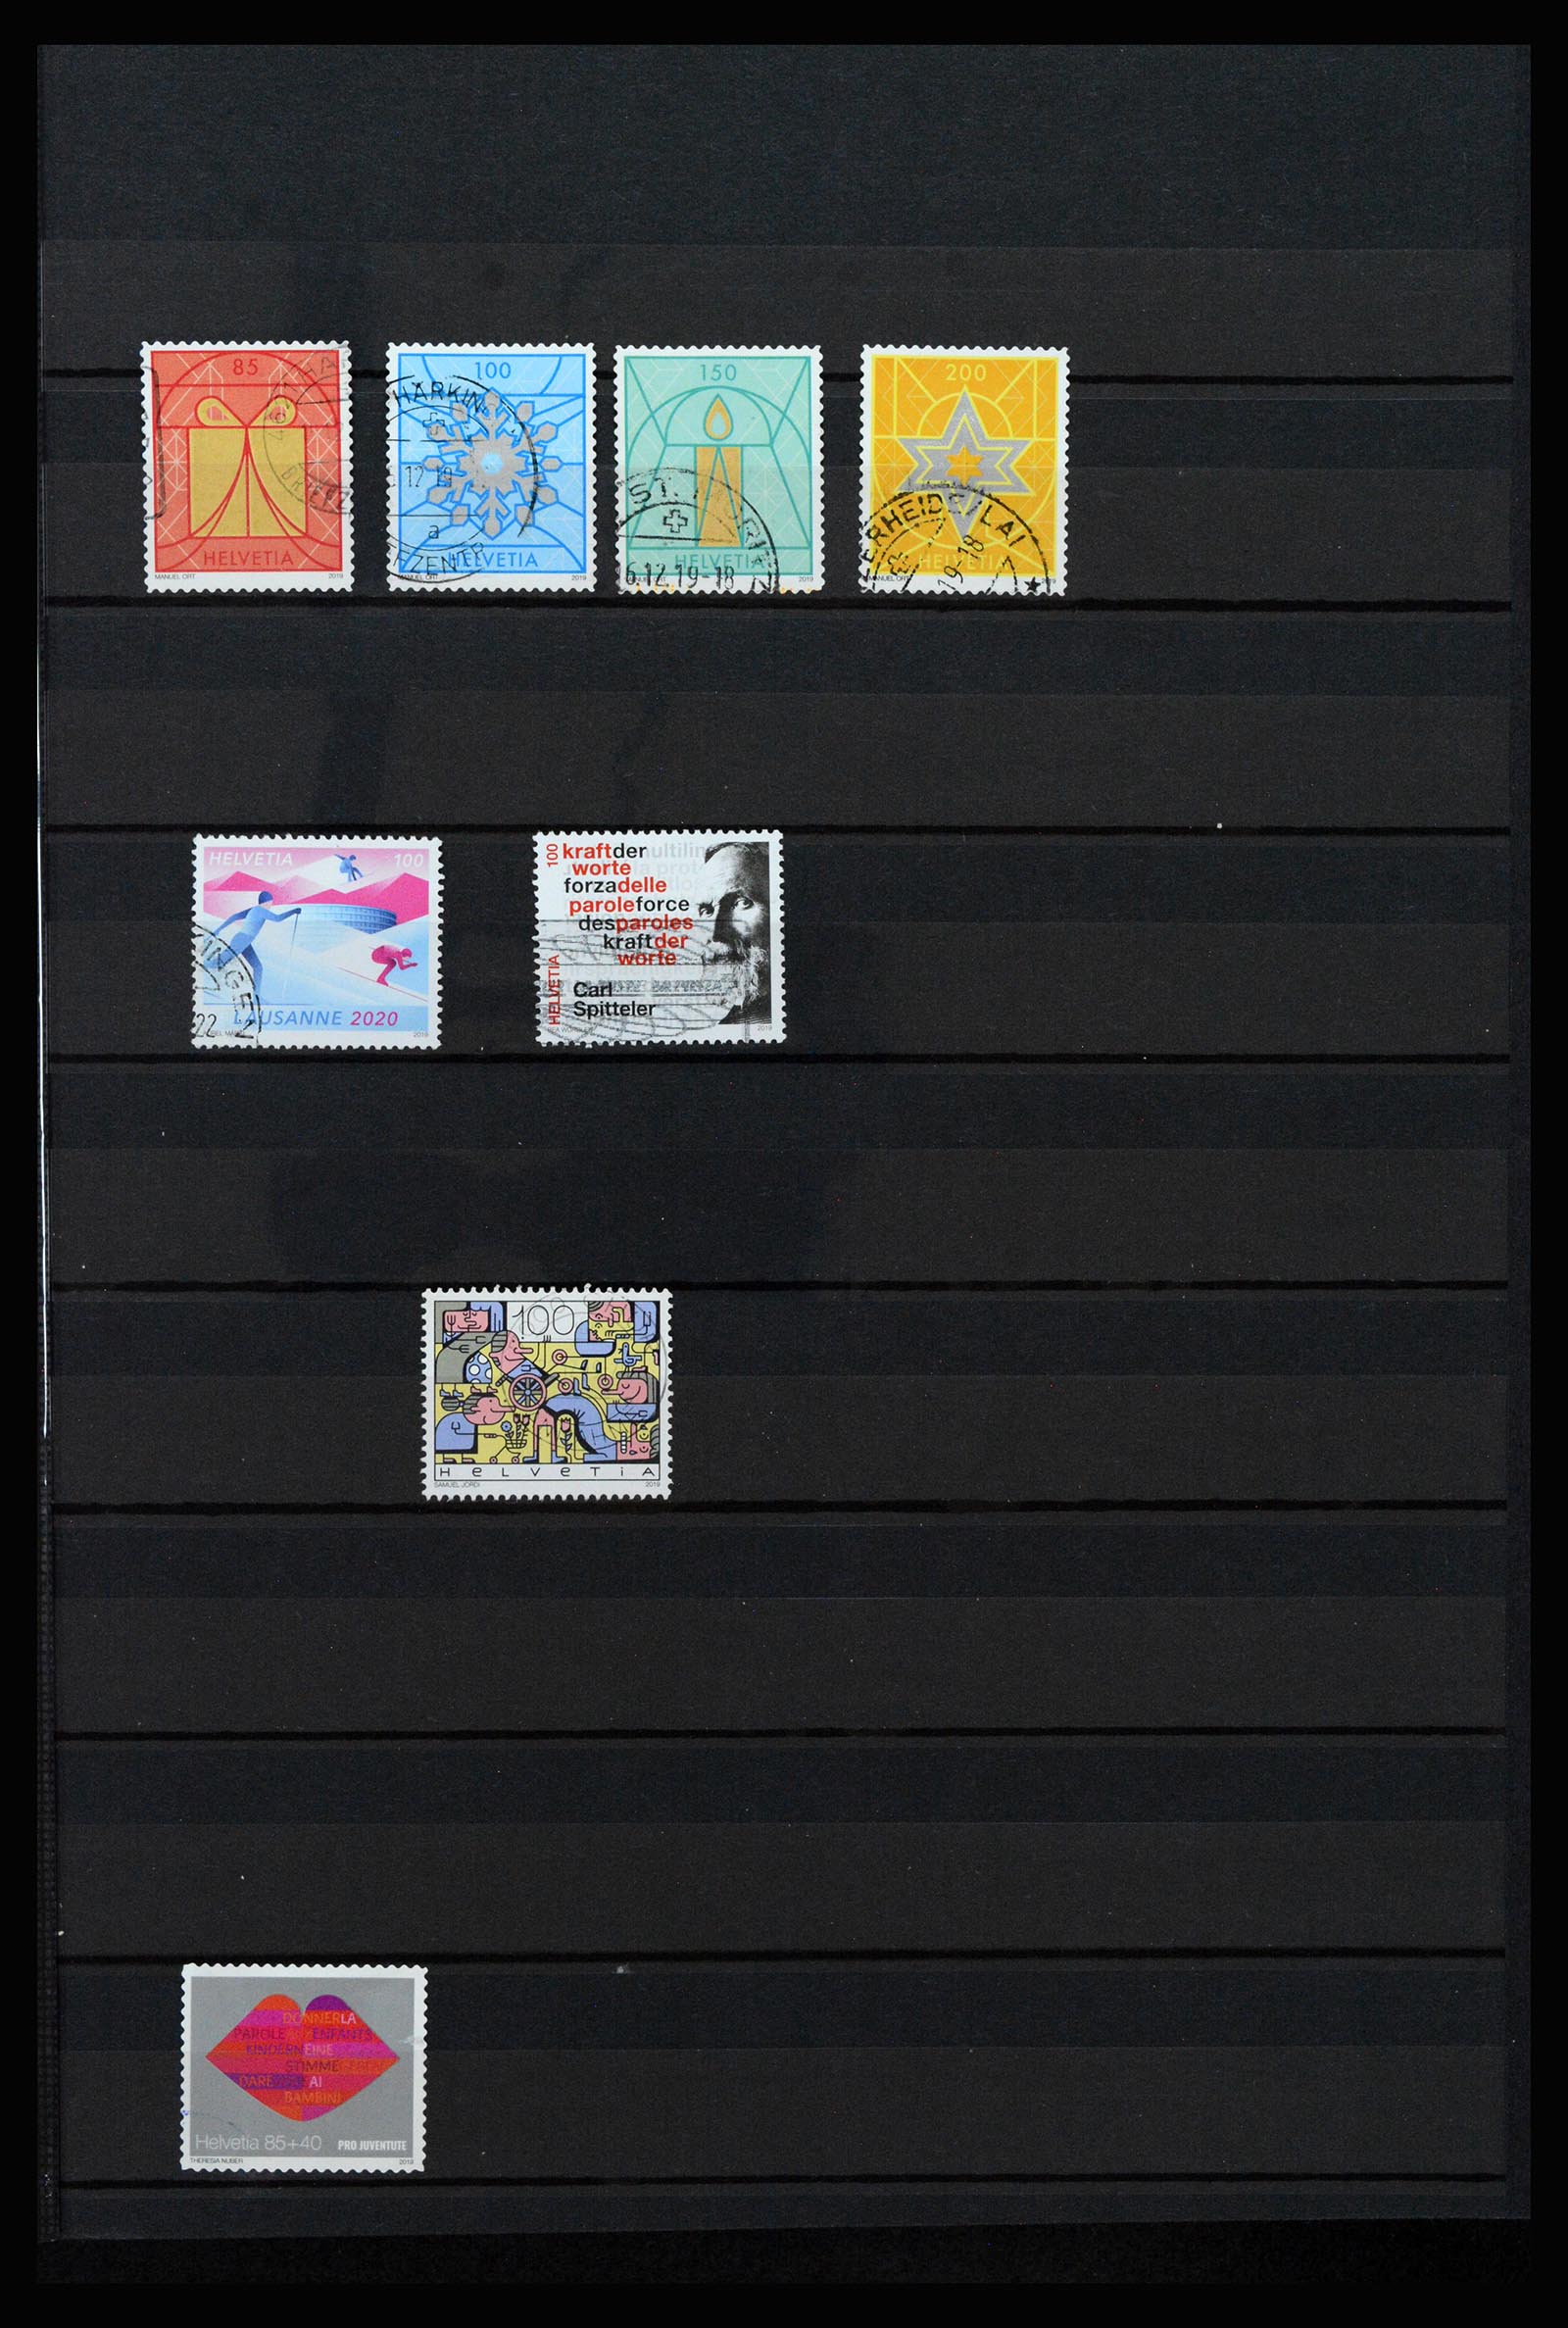 37225 195 - Stamp collection 37225 Switzerland 1854-2020.